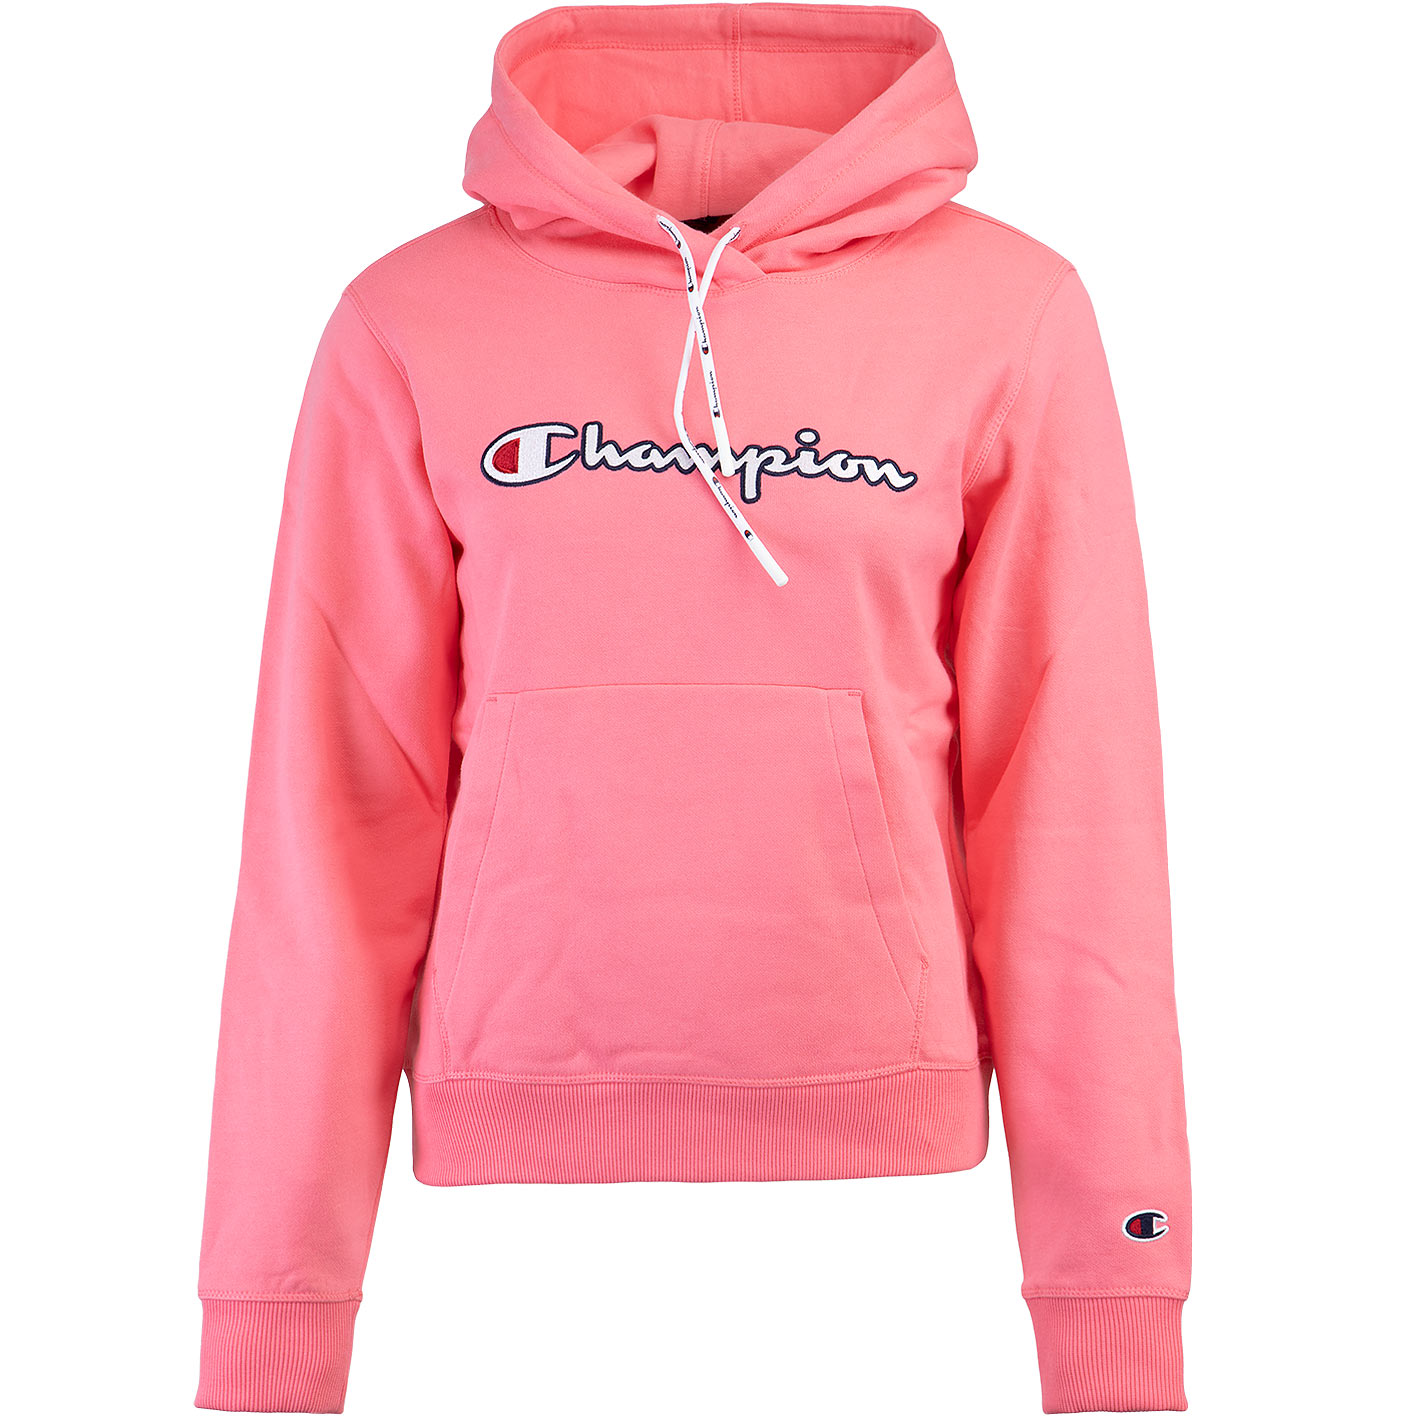 ☆ Champion Logo Damen Hoody pink - hier bestellen!